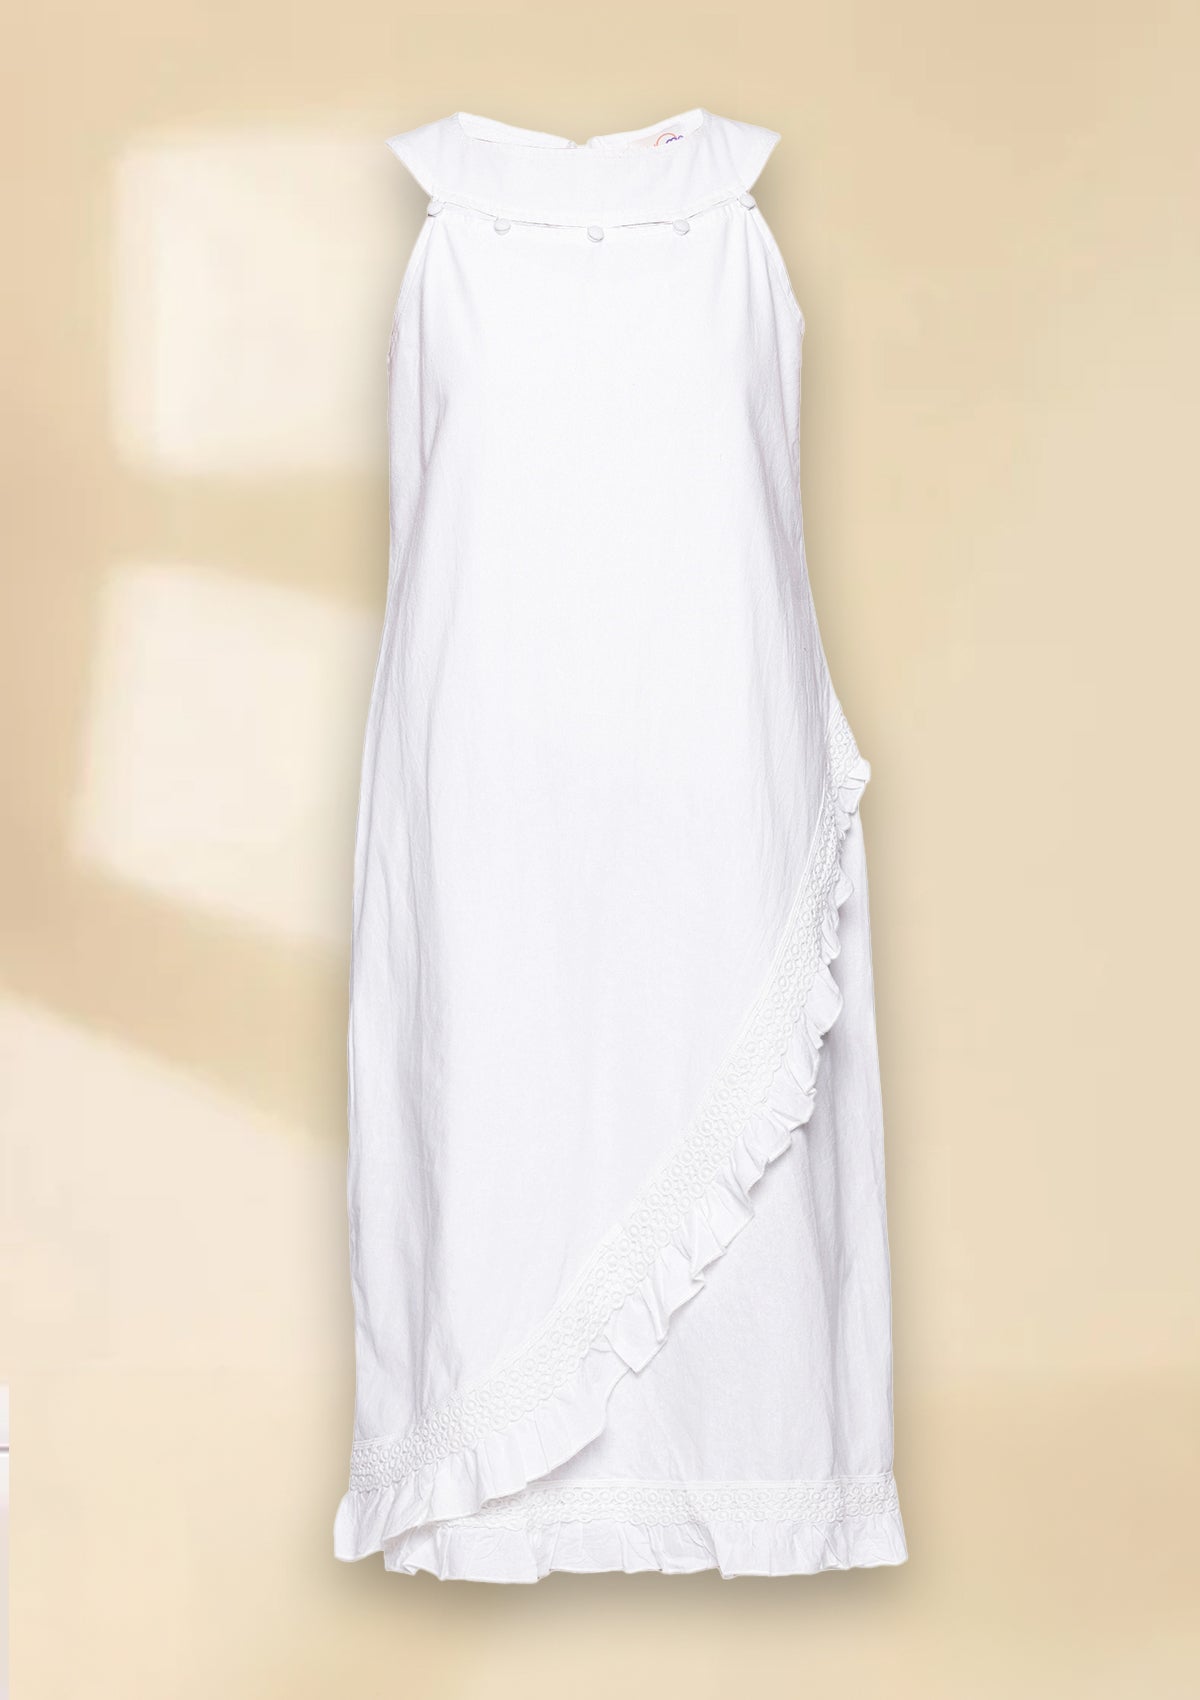 Vanilla Ice - Stylized Neckline Dress - IshqMe